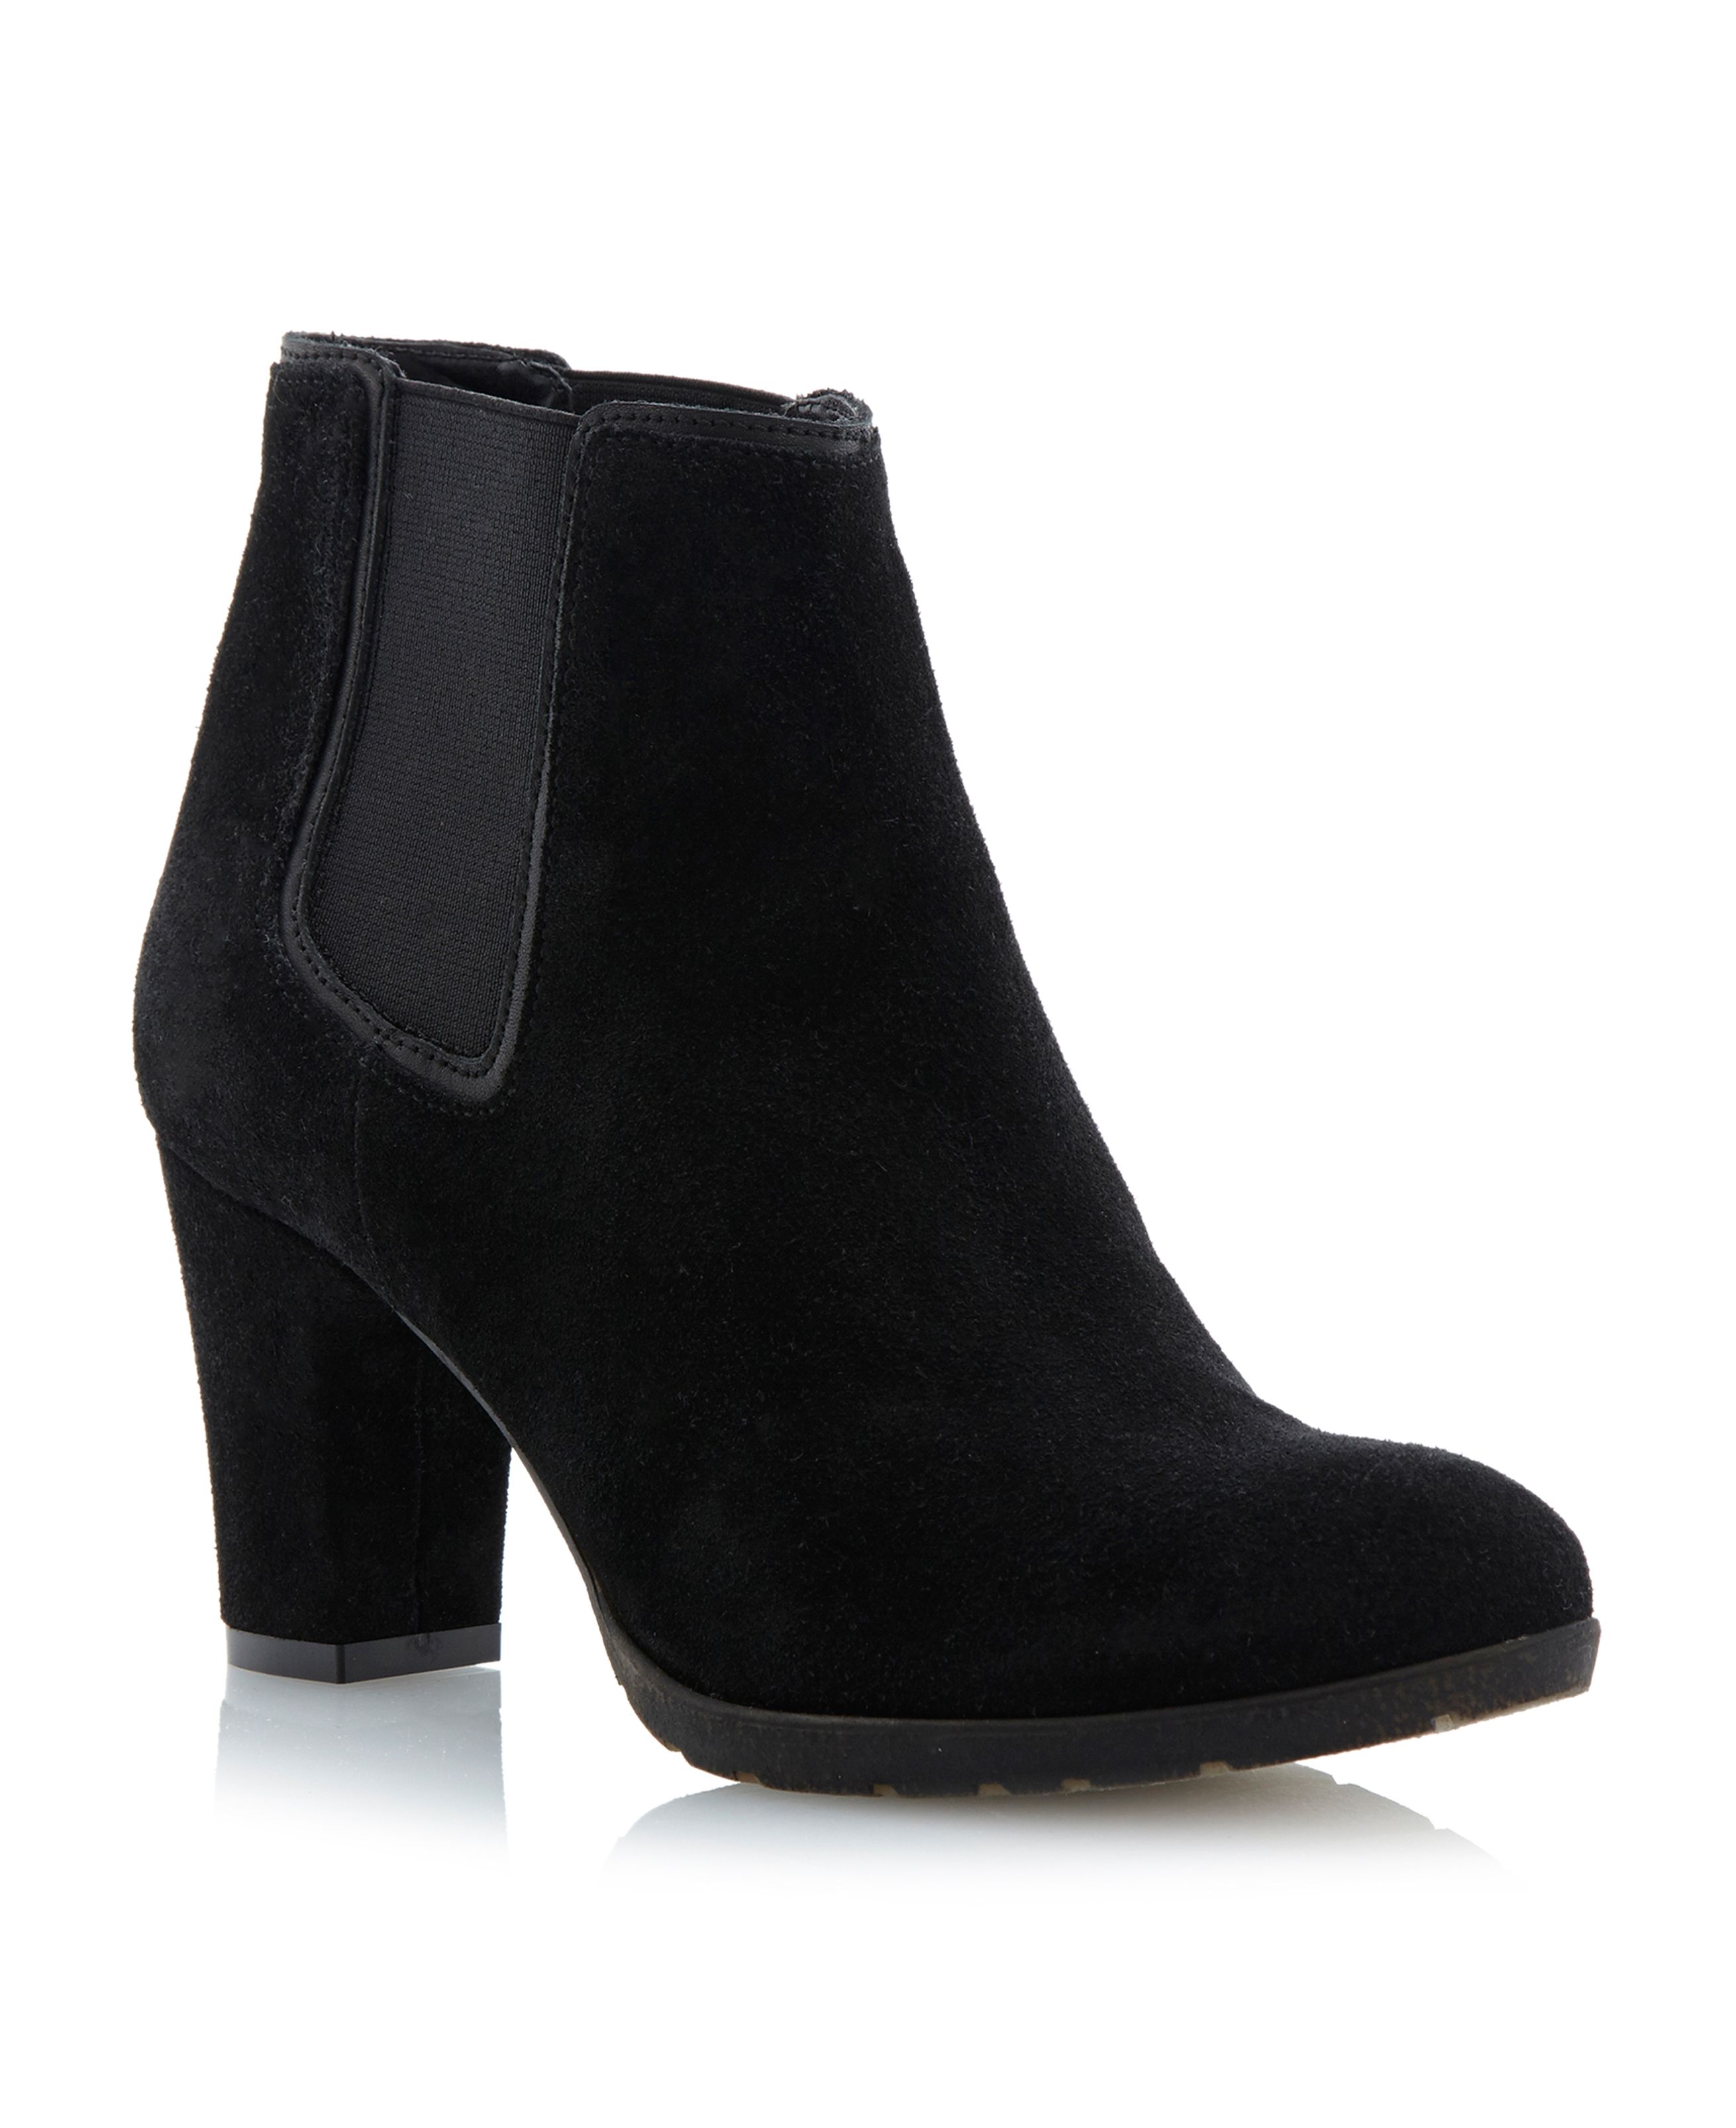 Linea Pittsburgh Block Heel Ankle Boots in Black (Black Suede) | Lyst